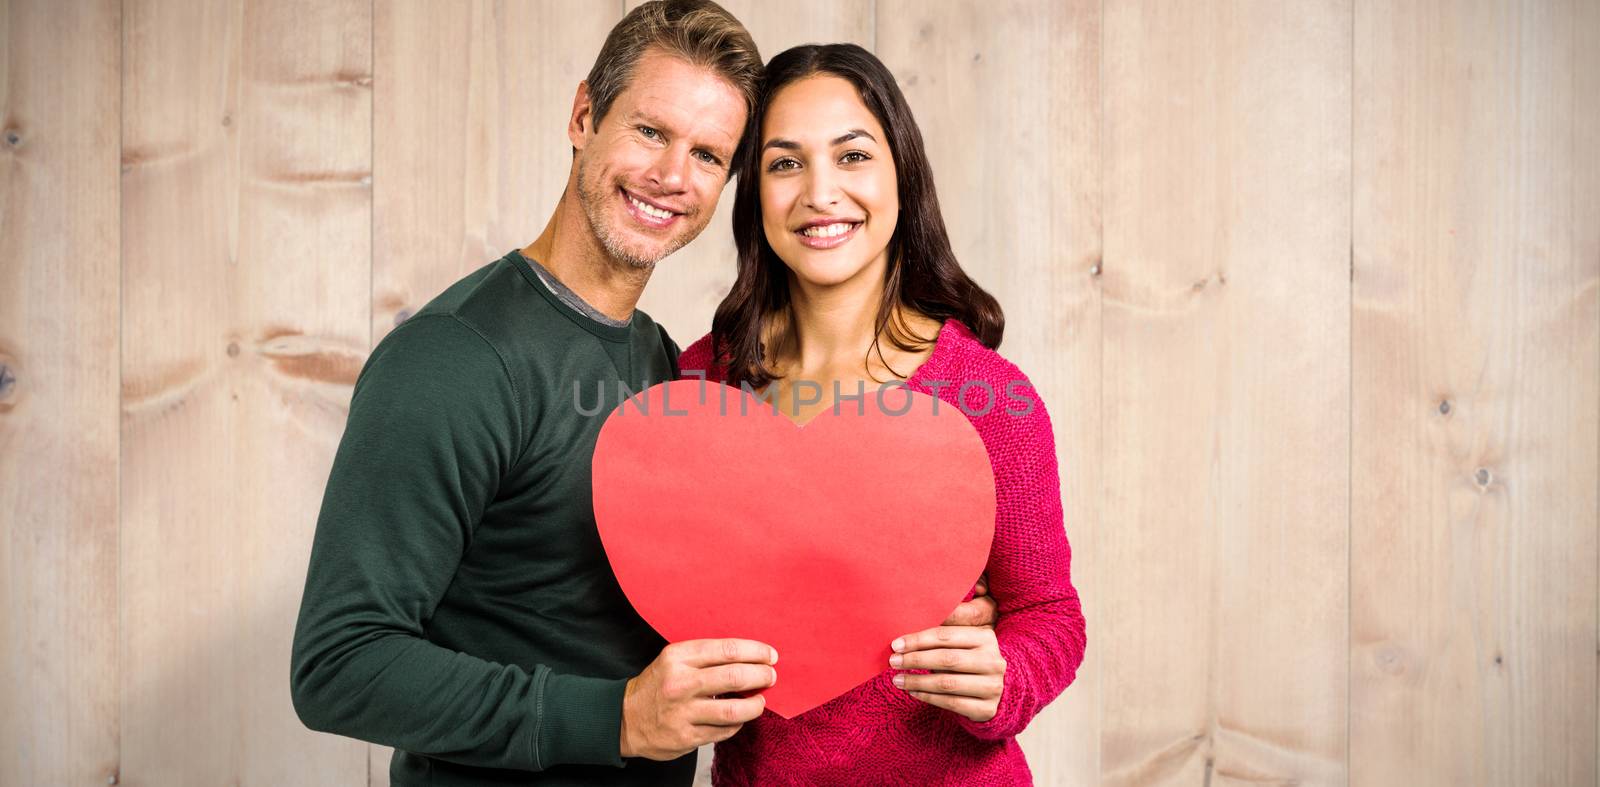 Portrait of smiling couple holding heart shape against wooden planks